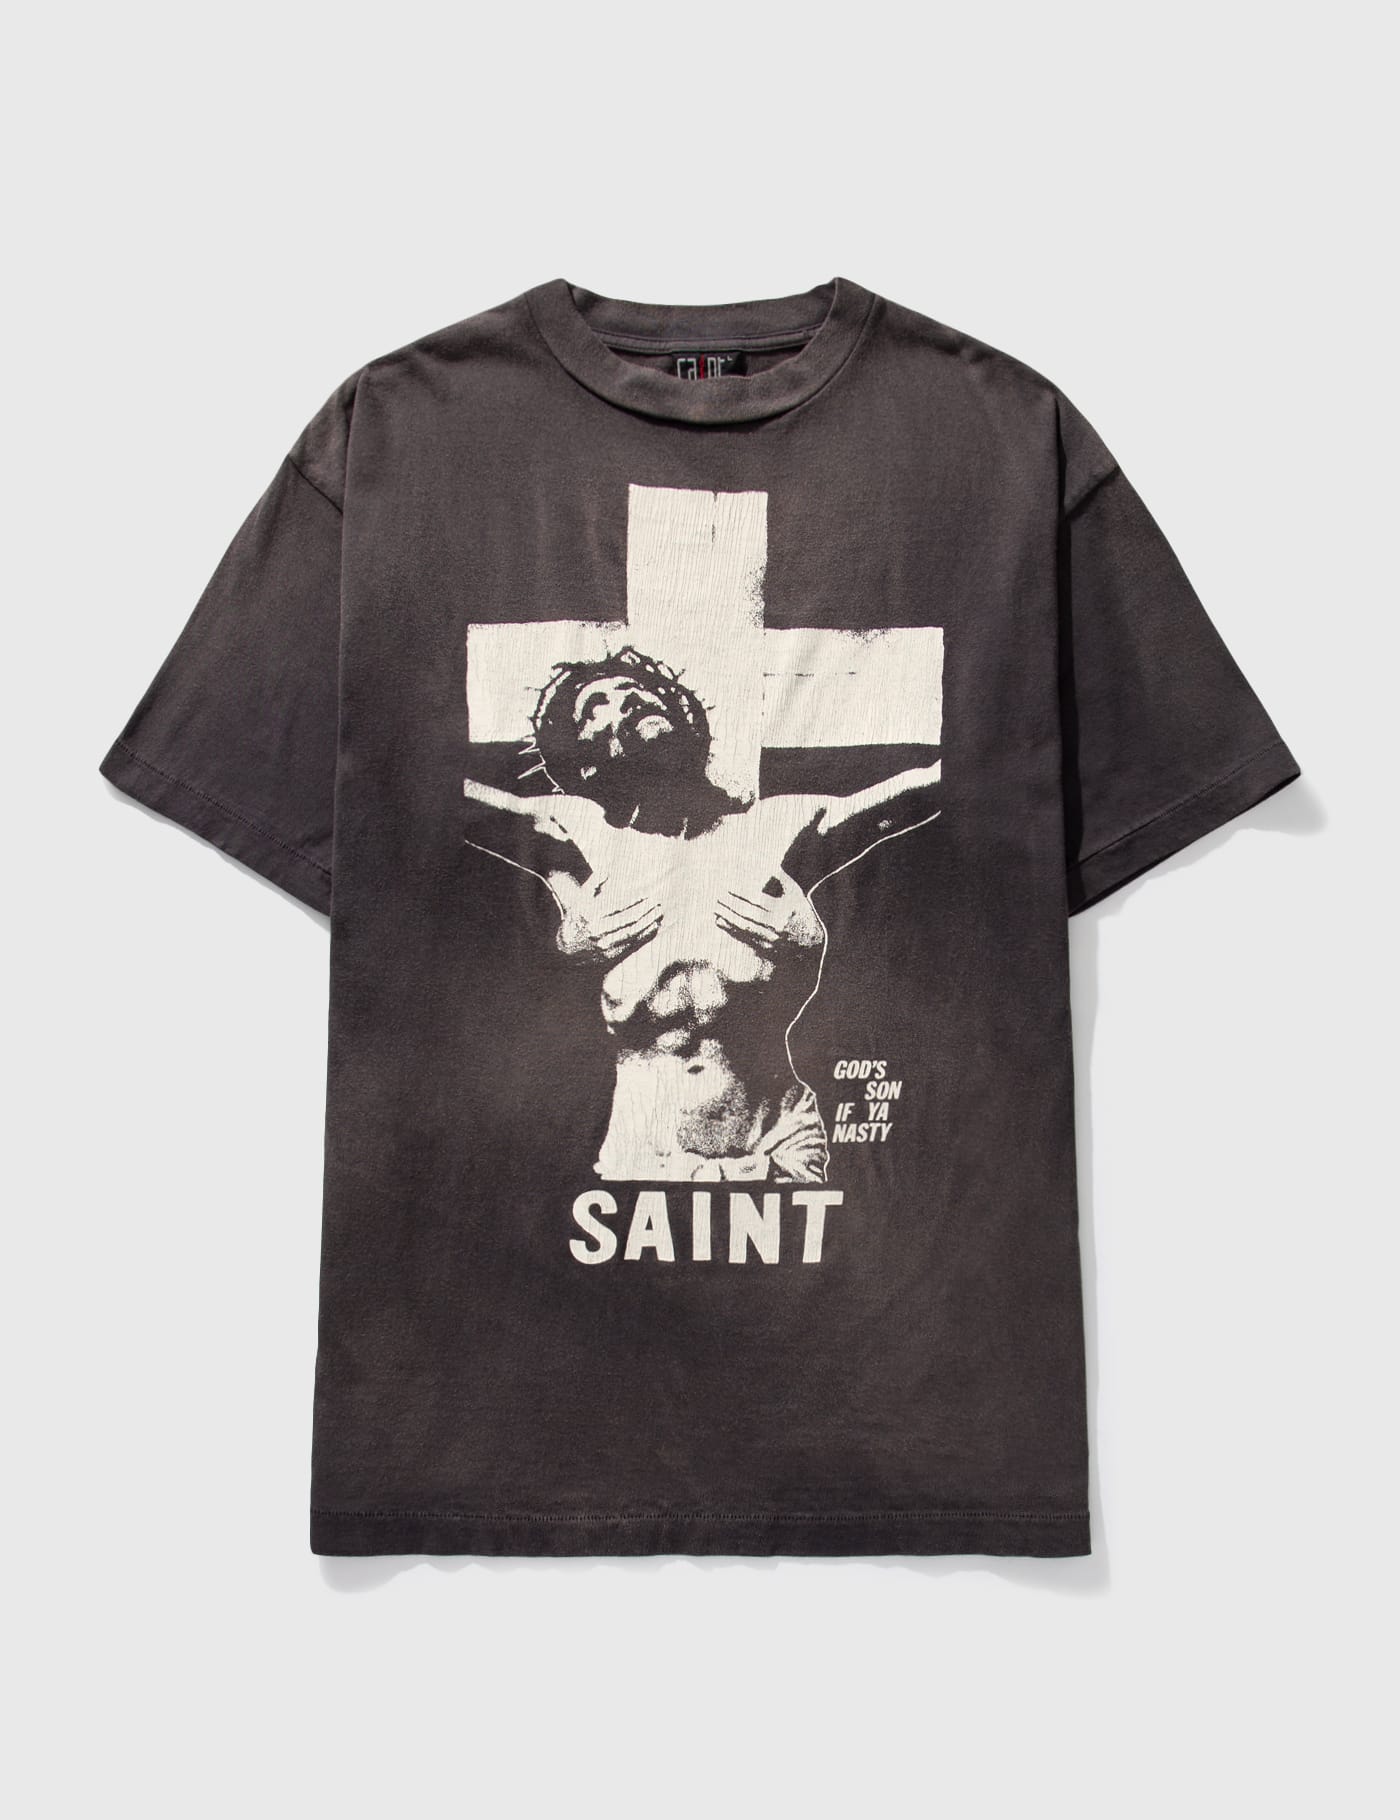 Saint Michael - セイント Tシャツ | HBX - ハイプビースト(Hypebeast